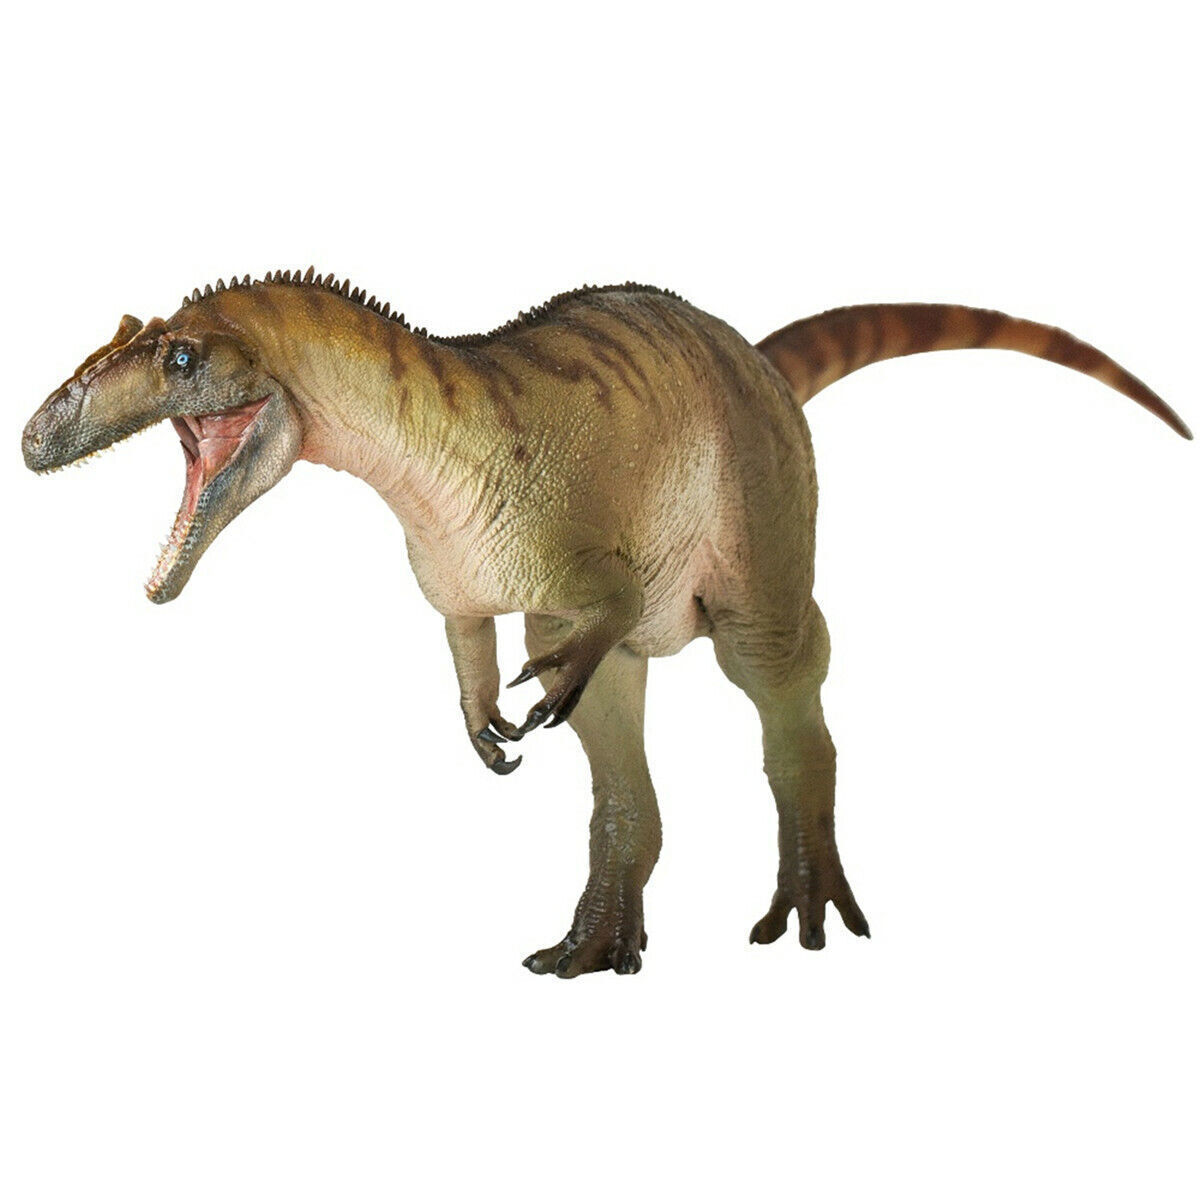 Allosaurus Paul Model Allosauridae Dinosaur Figure Animal Collector Decor